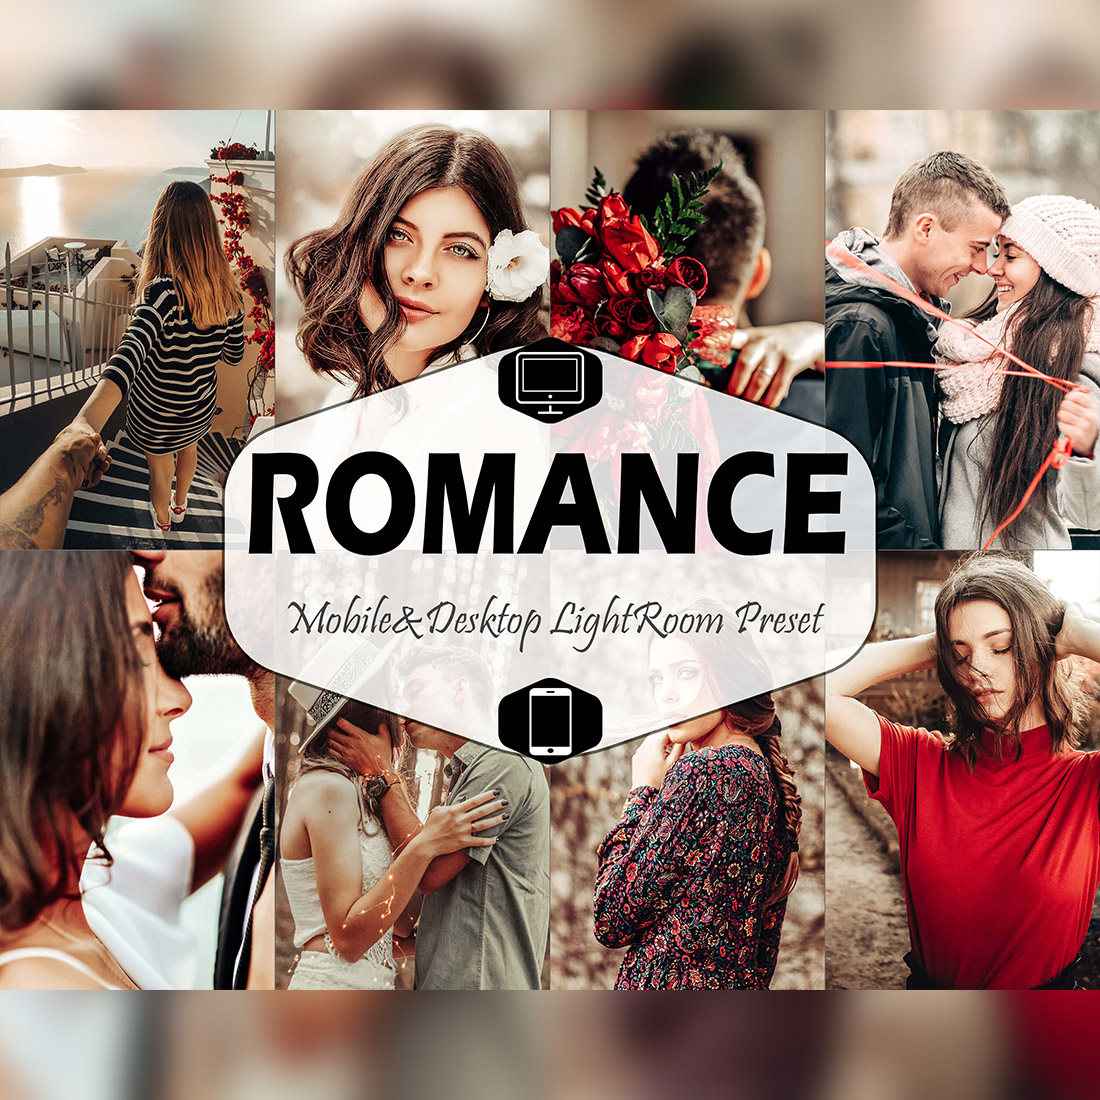 10 Romance Mobile & Desktop Lightroom Presets, lover valentines day LR preset, Portrait Trendy Filter, DNG Lifestyle Instagram Theme cover image.